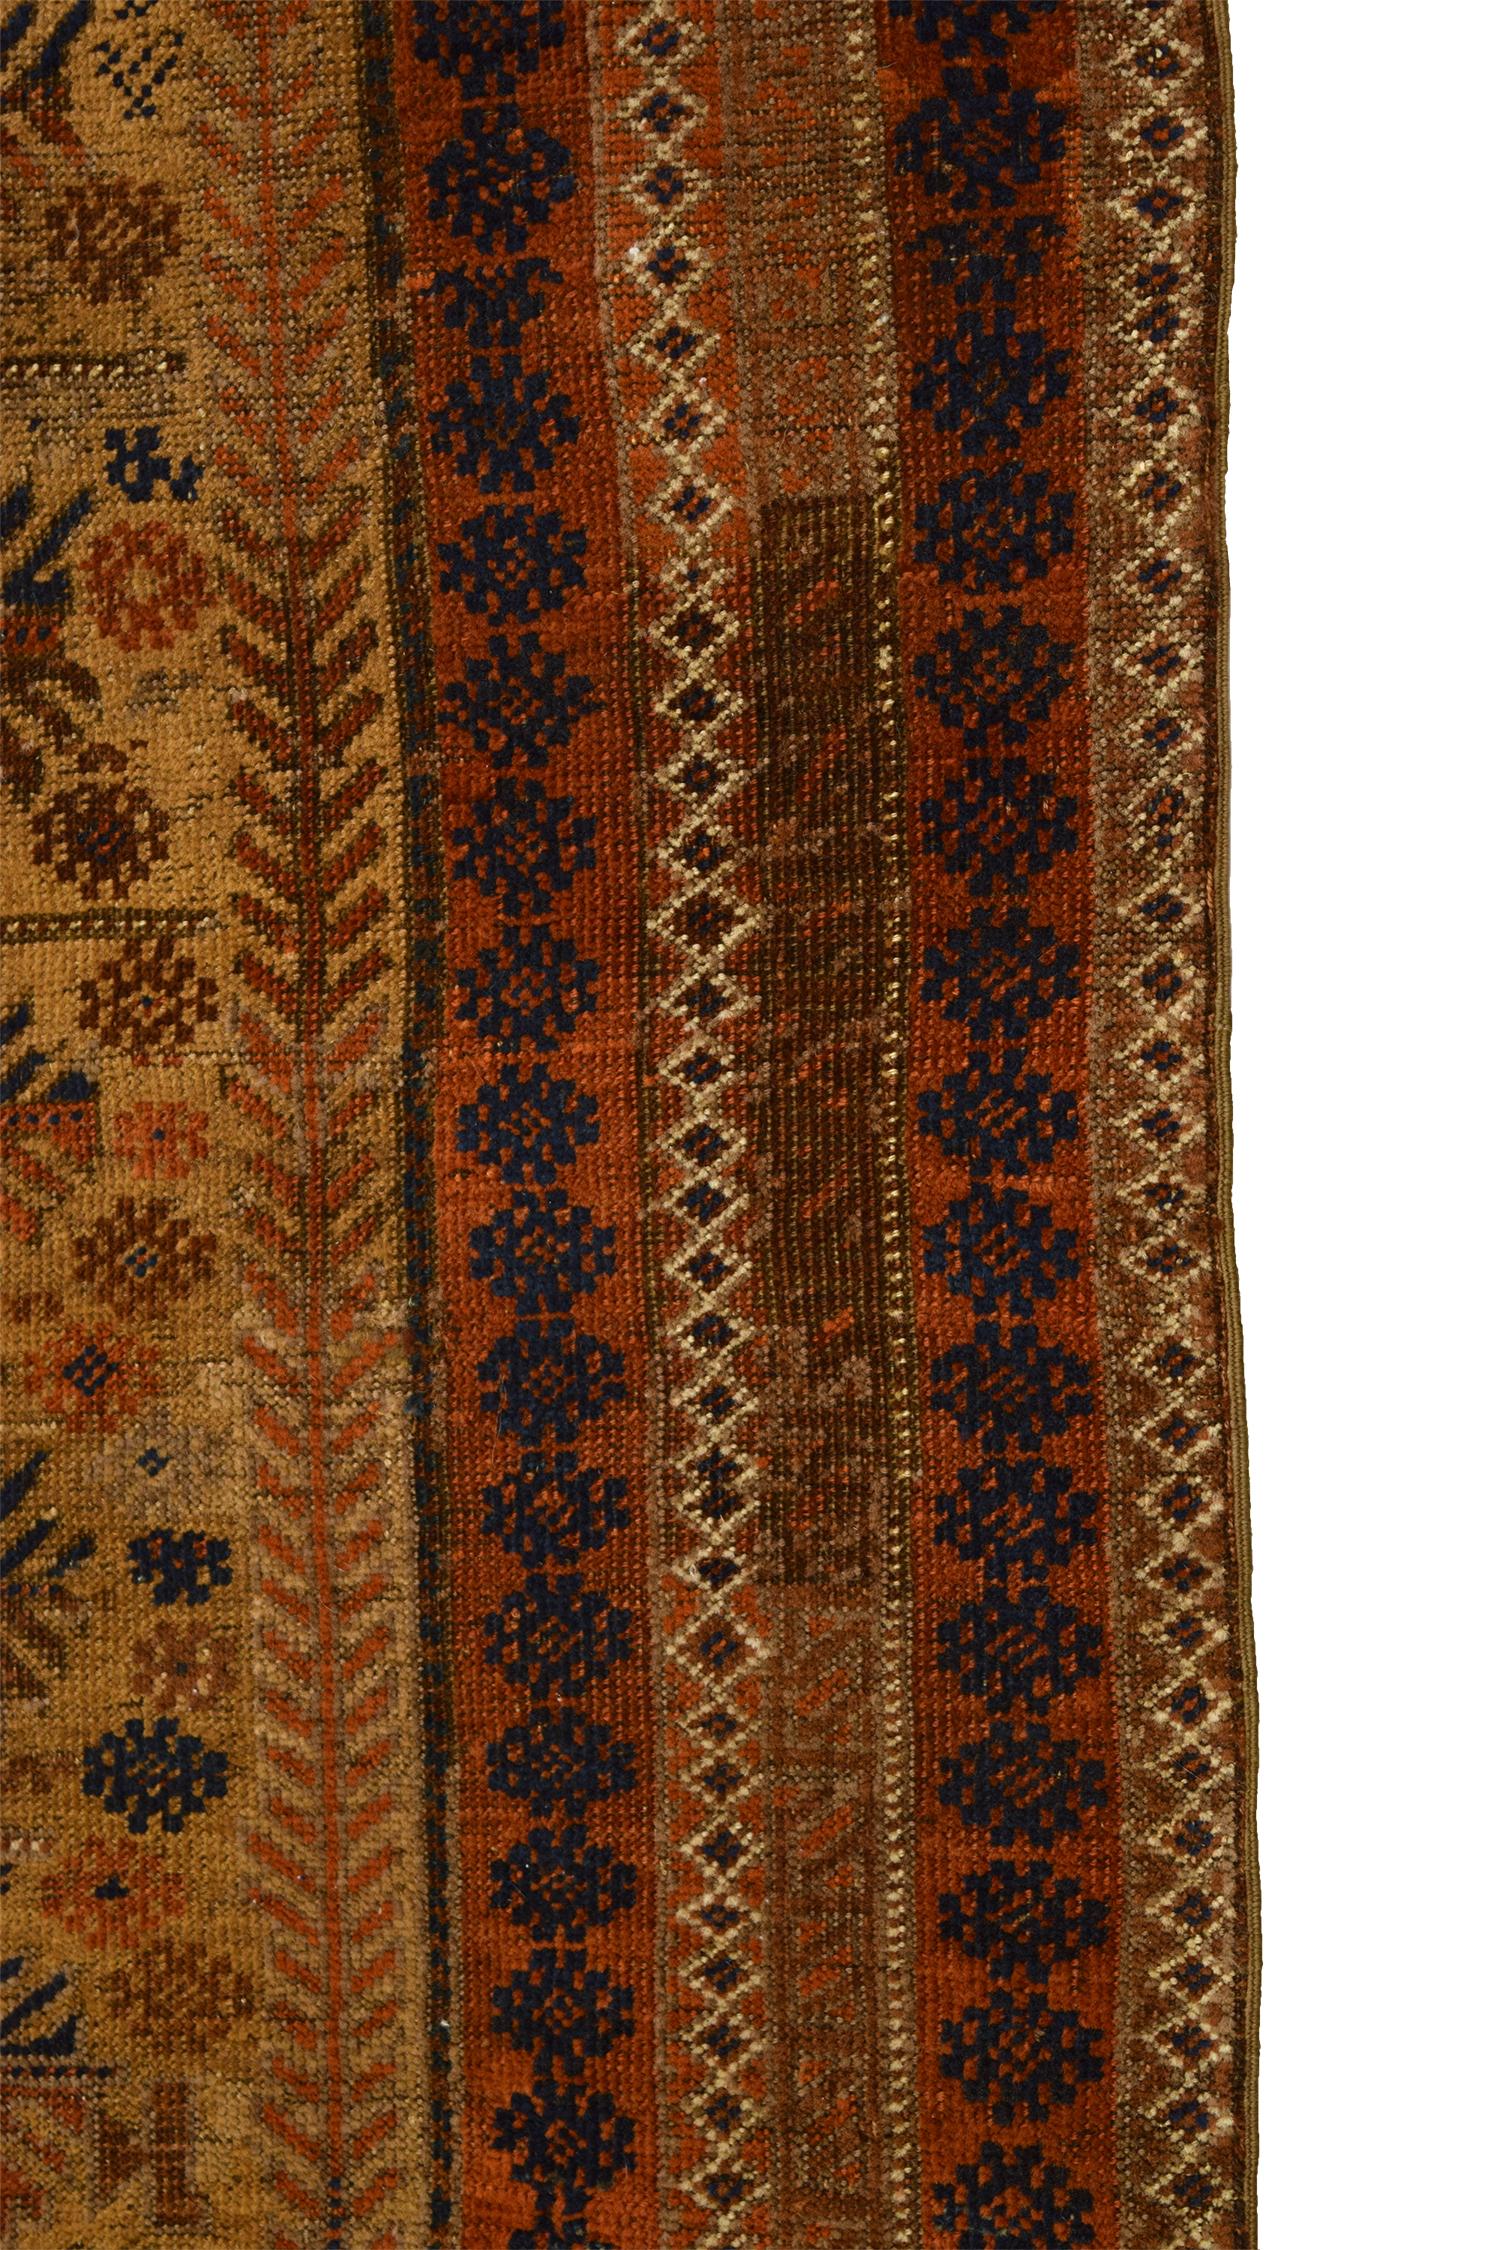 Other Antique 1870s Persian Balouchi Rug, Orange & Blue, 2x3